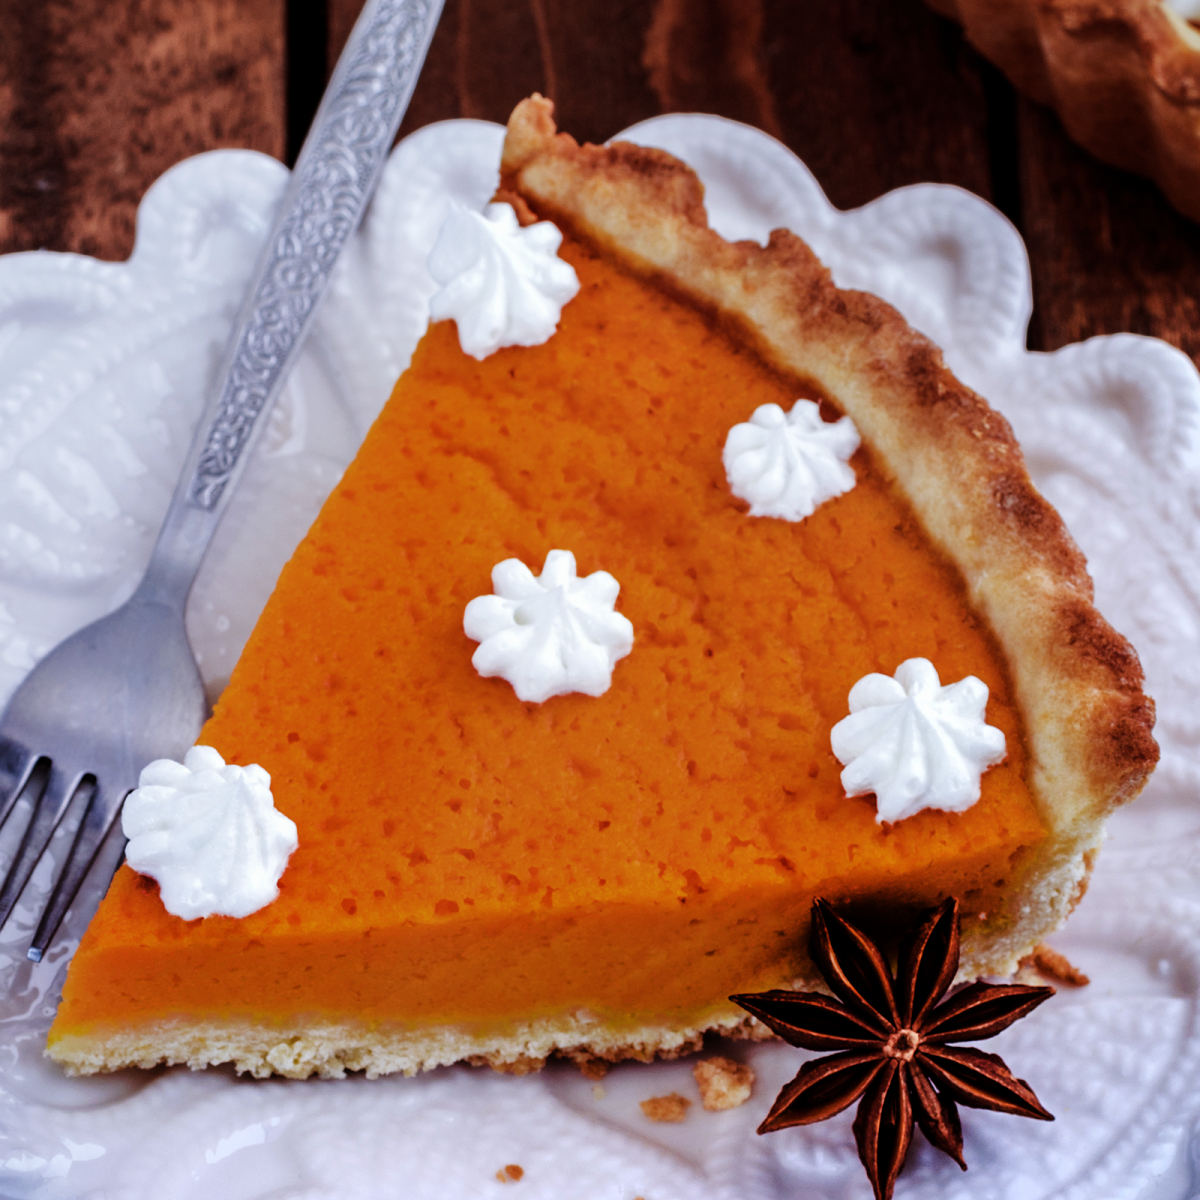 How to make a pumpkin pie